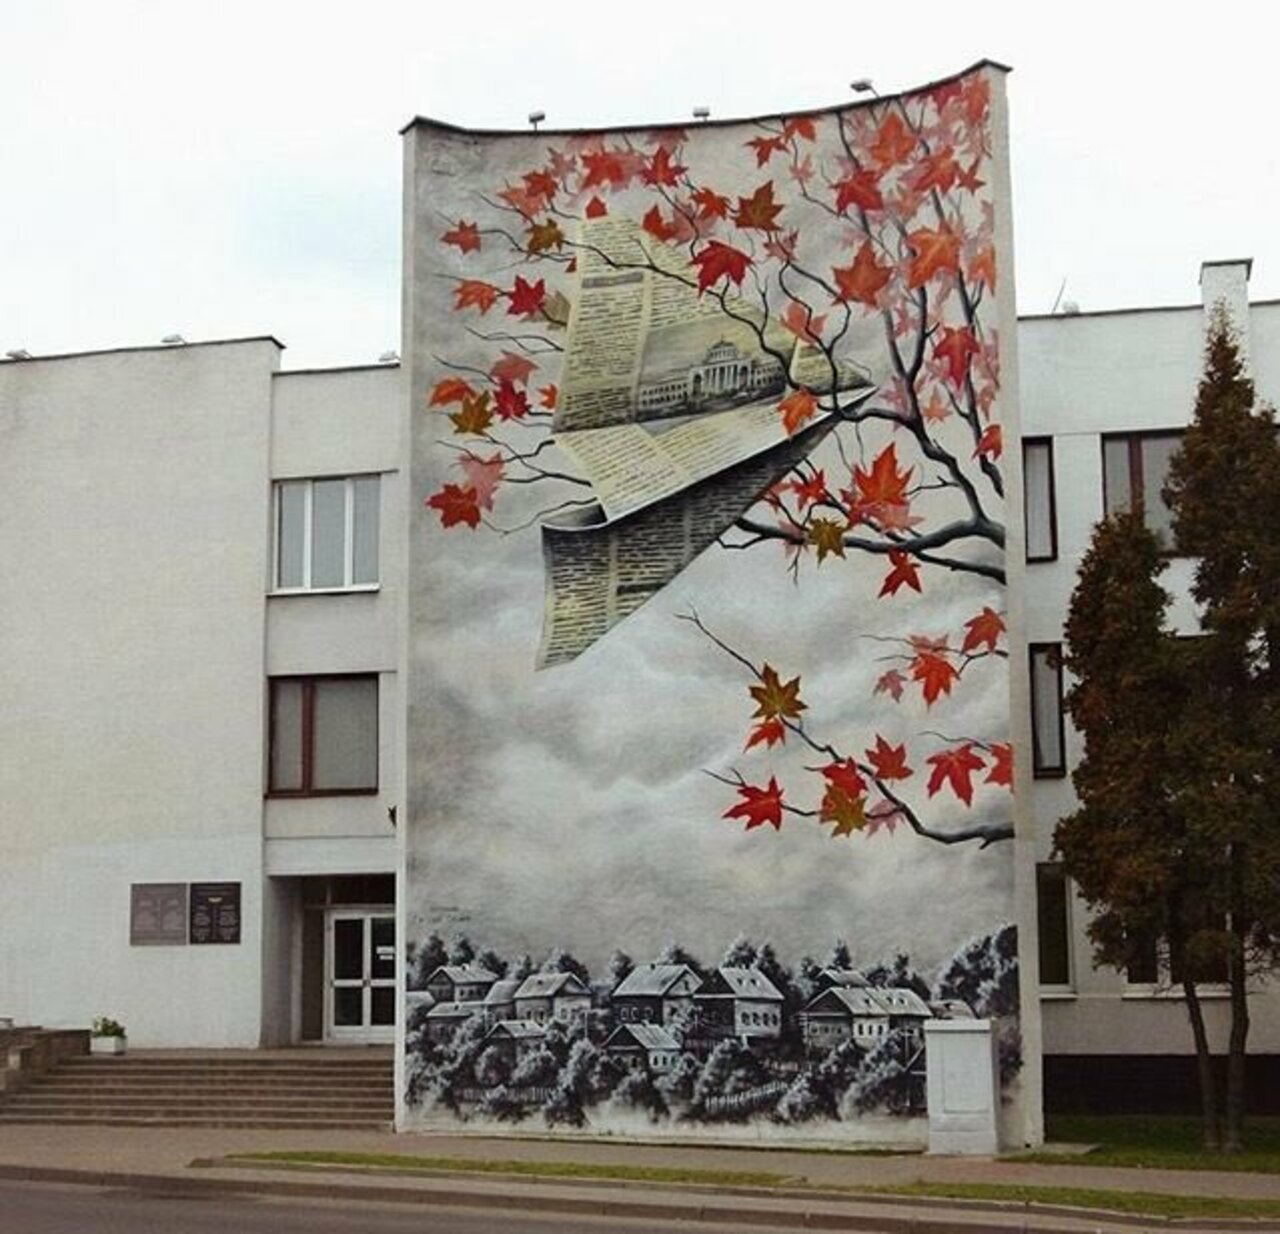 New Street Art by MUTUS in Belarus 

#art #graffiti #mural #streetart https://t.co/Rjqk2jGJK3